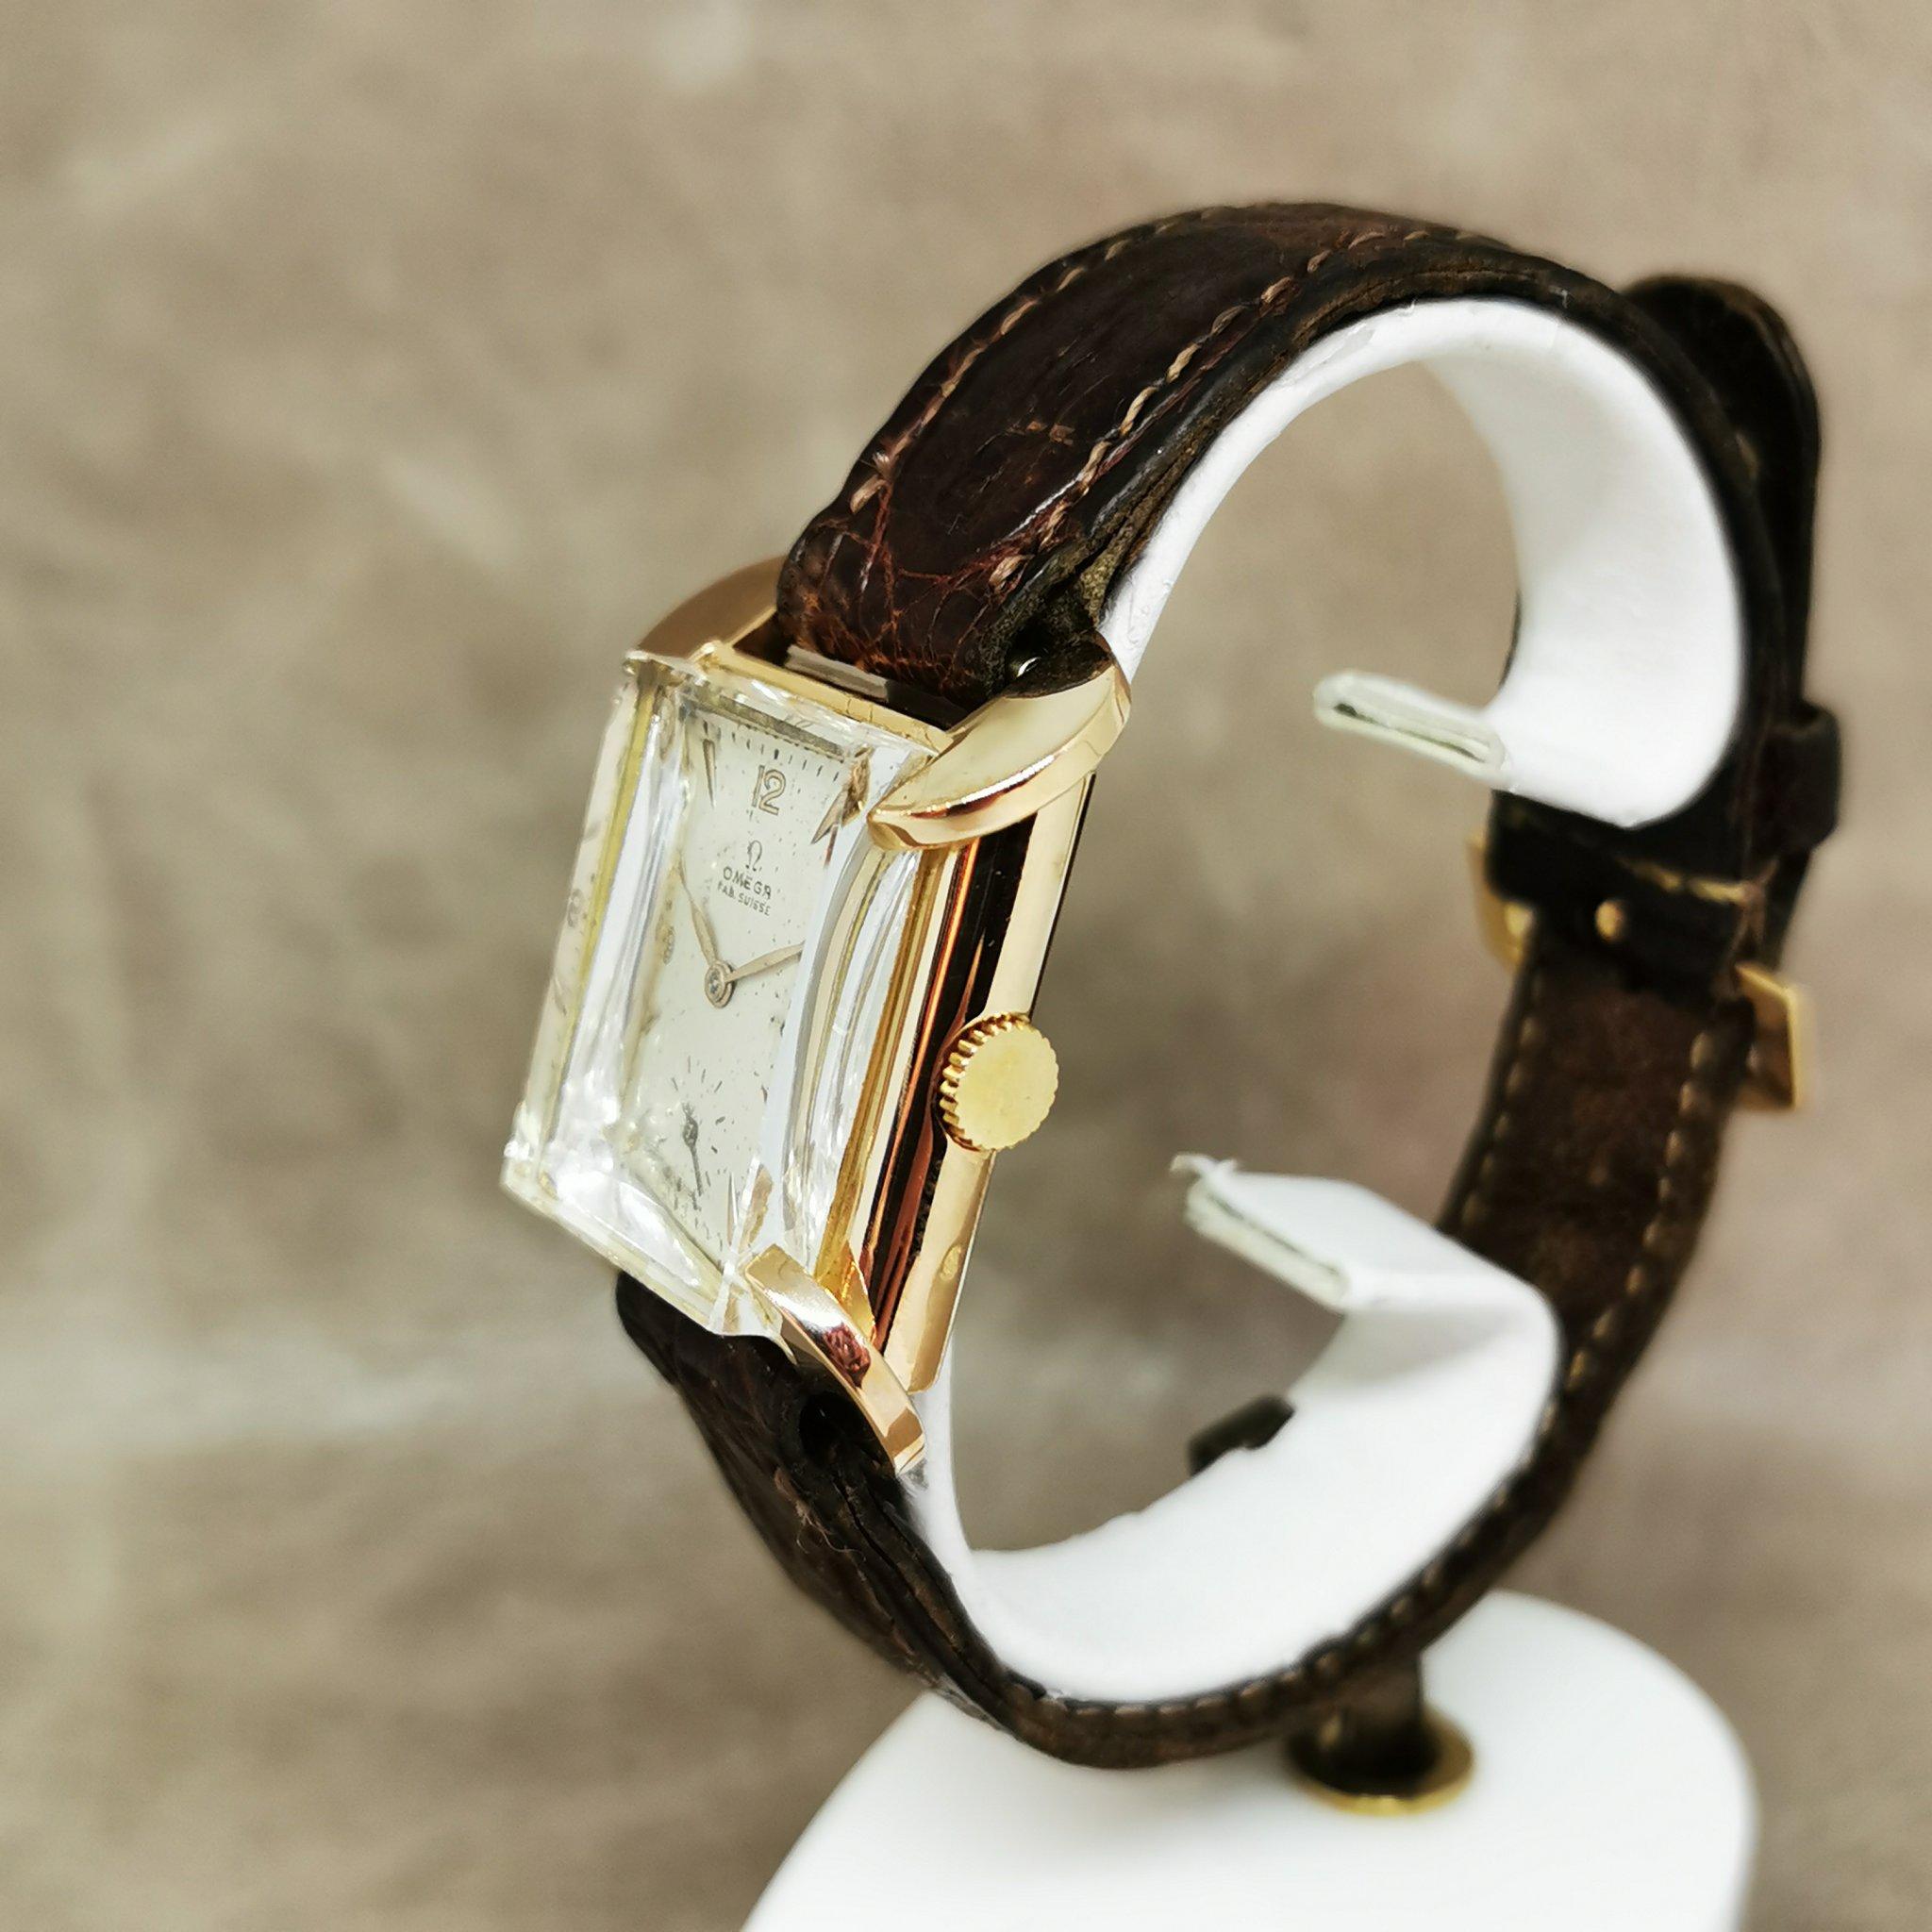 Manufacturer: Omega 

Model: scarab 

Year : 1930 

Serial number: 10833266

Material(s): 18-karat gold 

Dimensions: 24 x 25mm

Glass: sapphire 

Lume: no 

Gauge: R 17.8

Bracelet / Strap: leather 

Width of the horn gap: